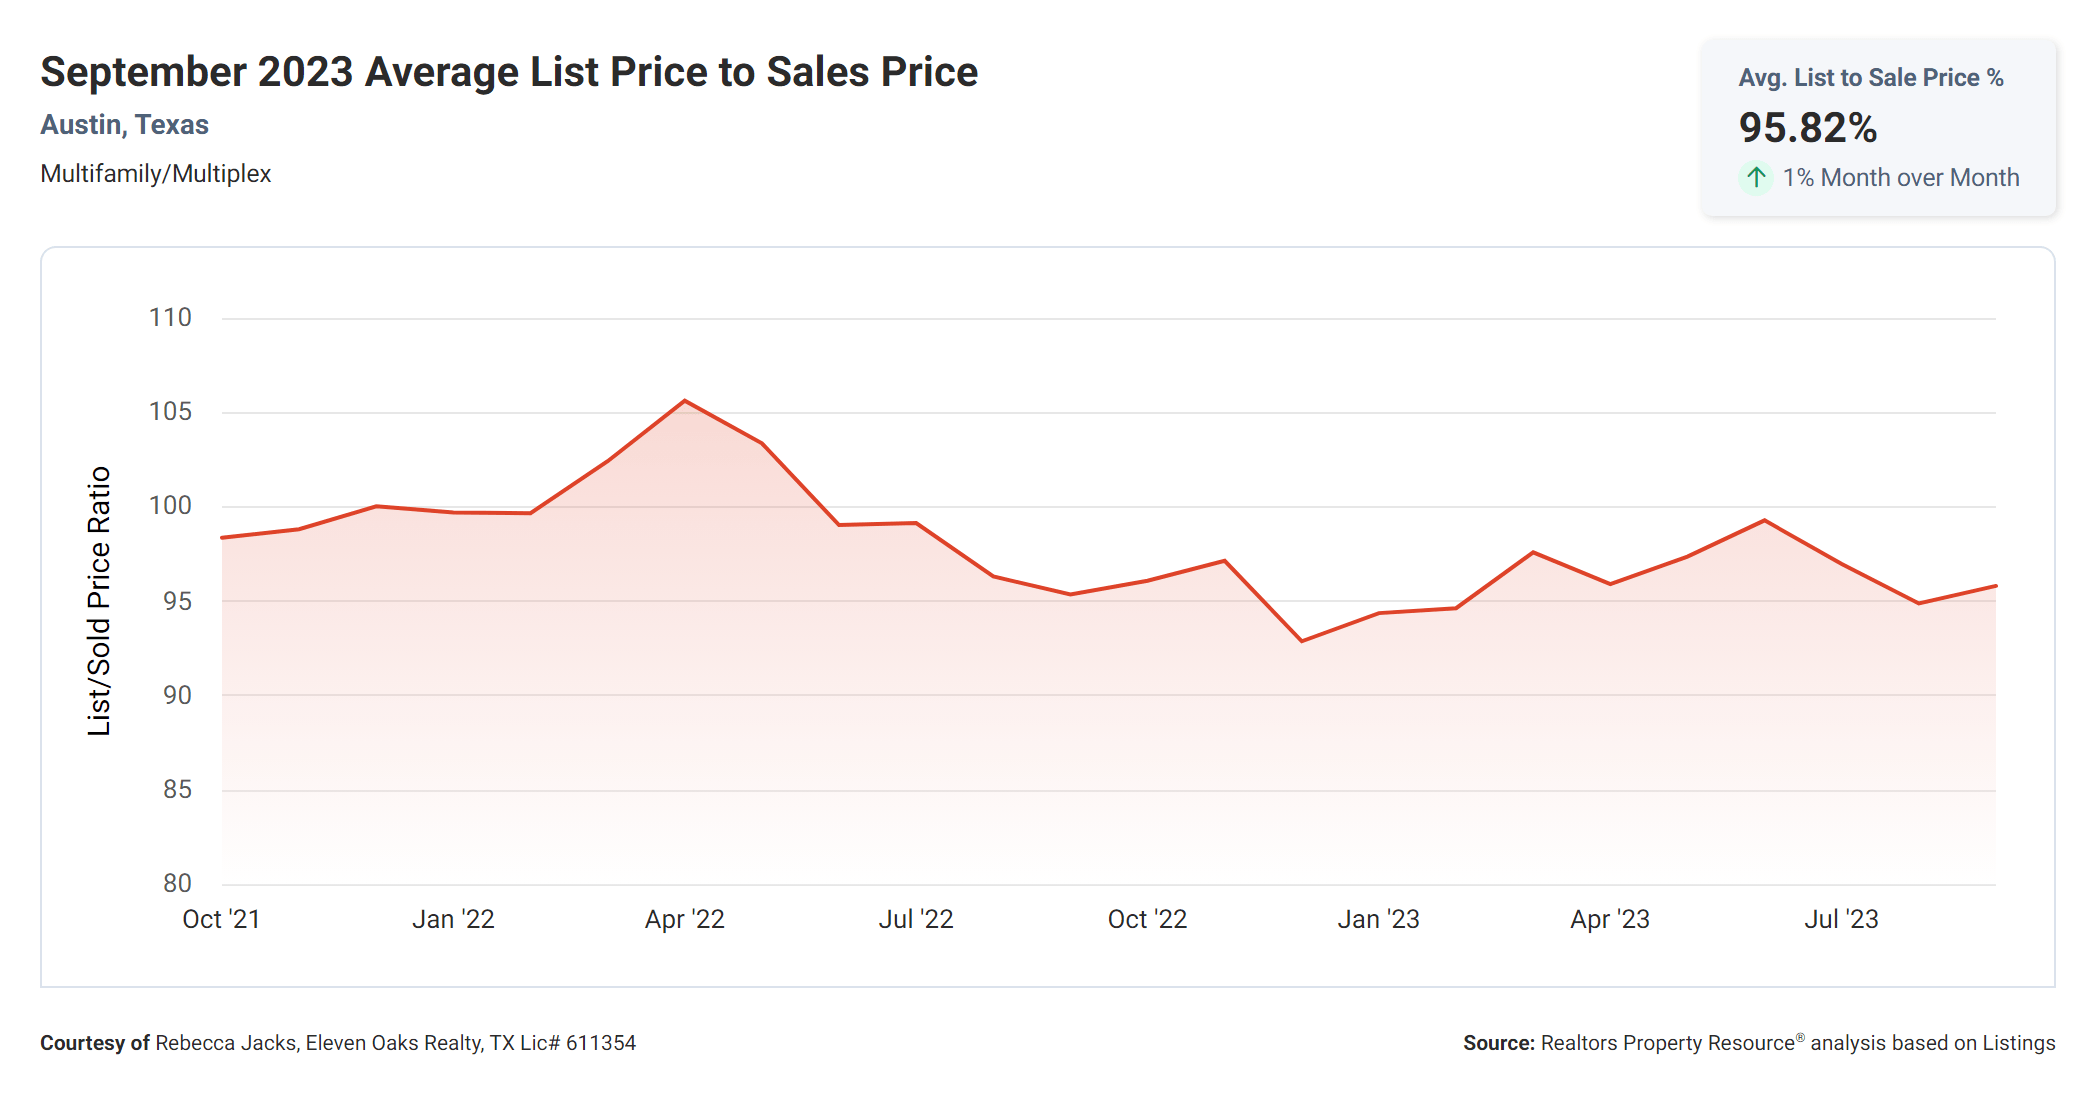 September 2023 austin tx multi family property average list price to sales price